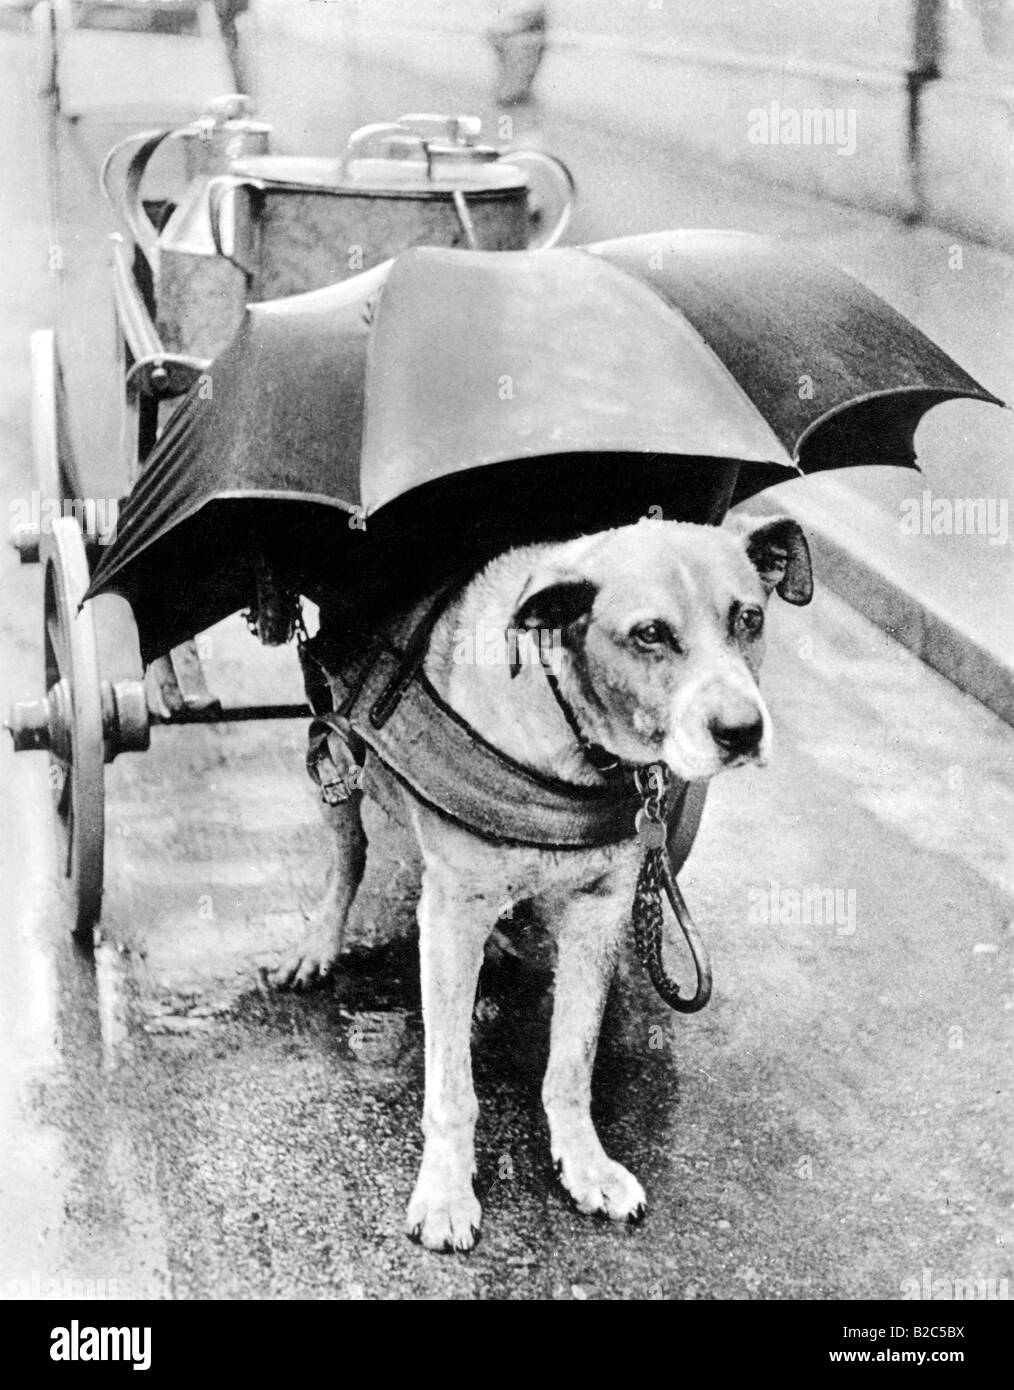 Dog with an umbrella above its head, historical photo, circa 1930 Stock Photo